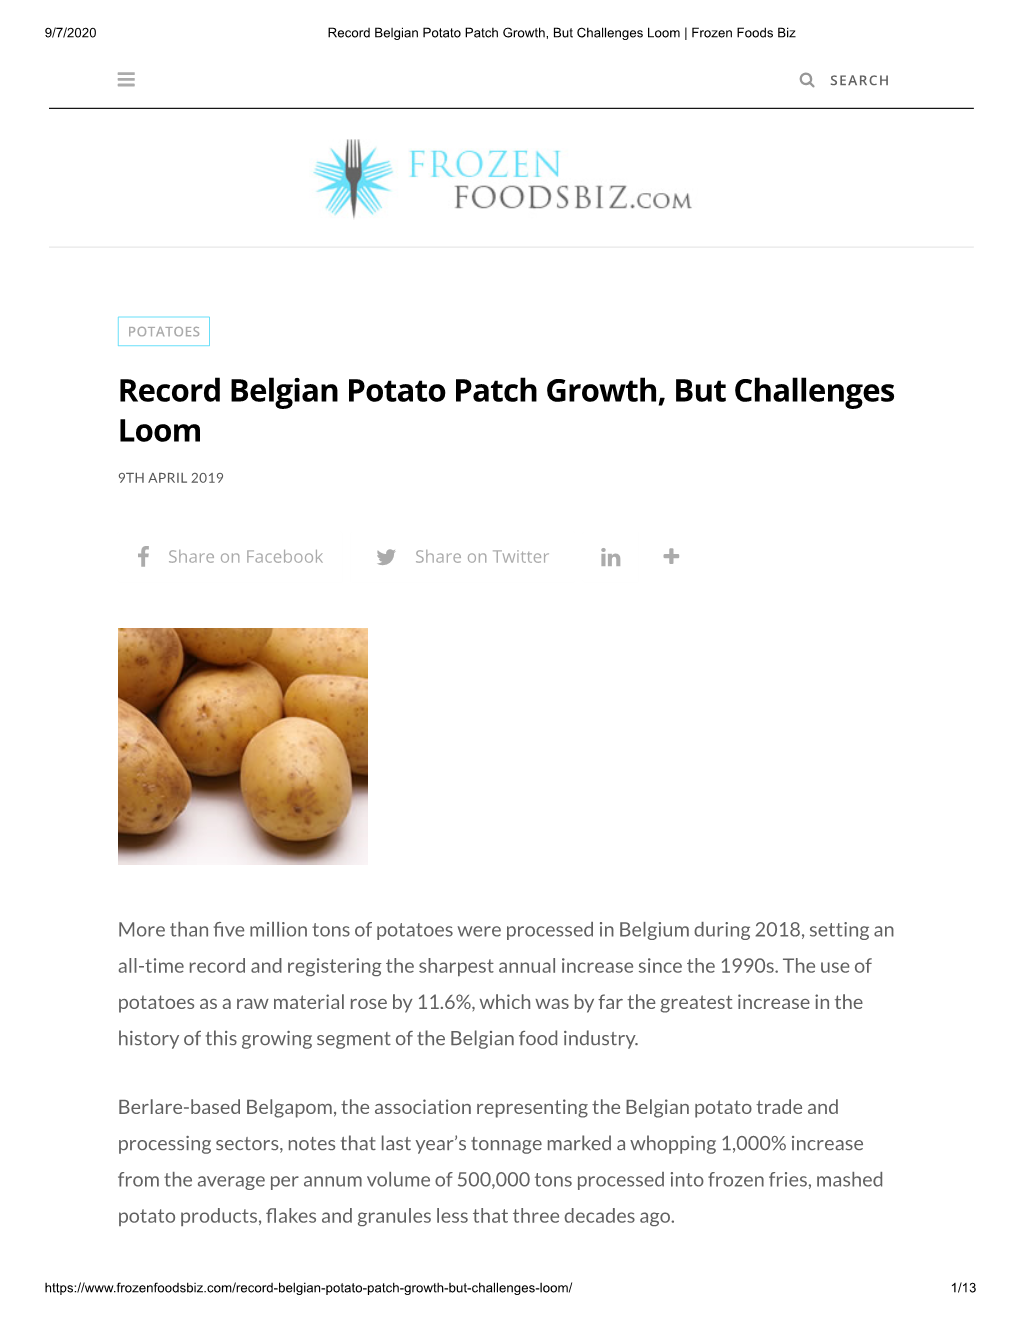 Record Belgian Potato Patch Growth, but Challenges Loom | Frozen Foods Biz